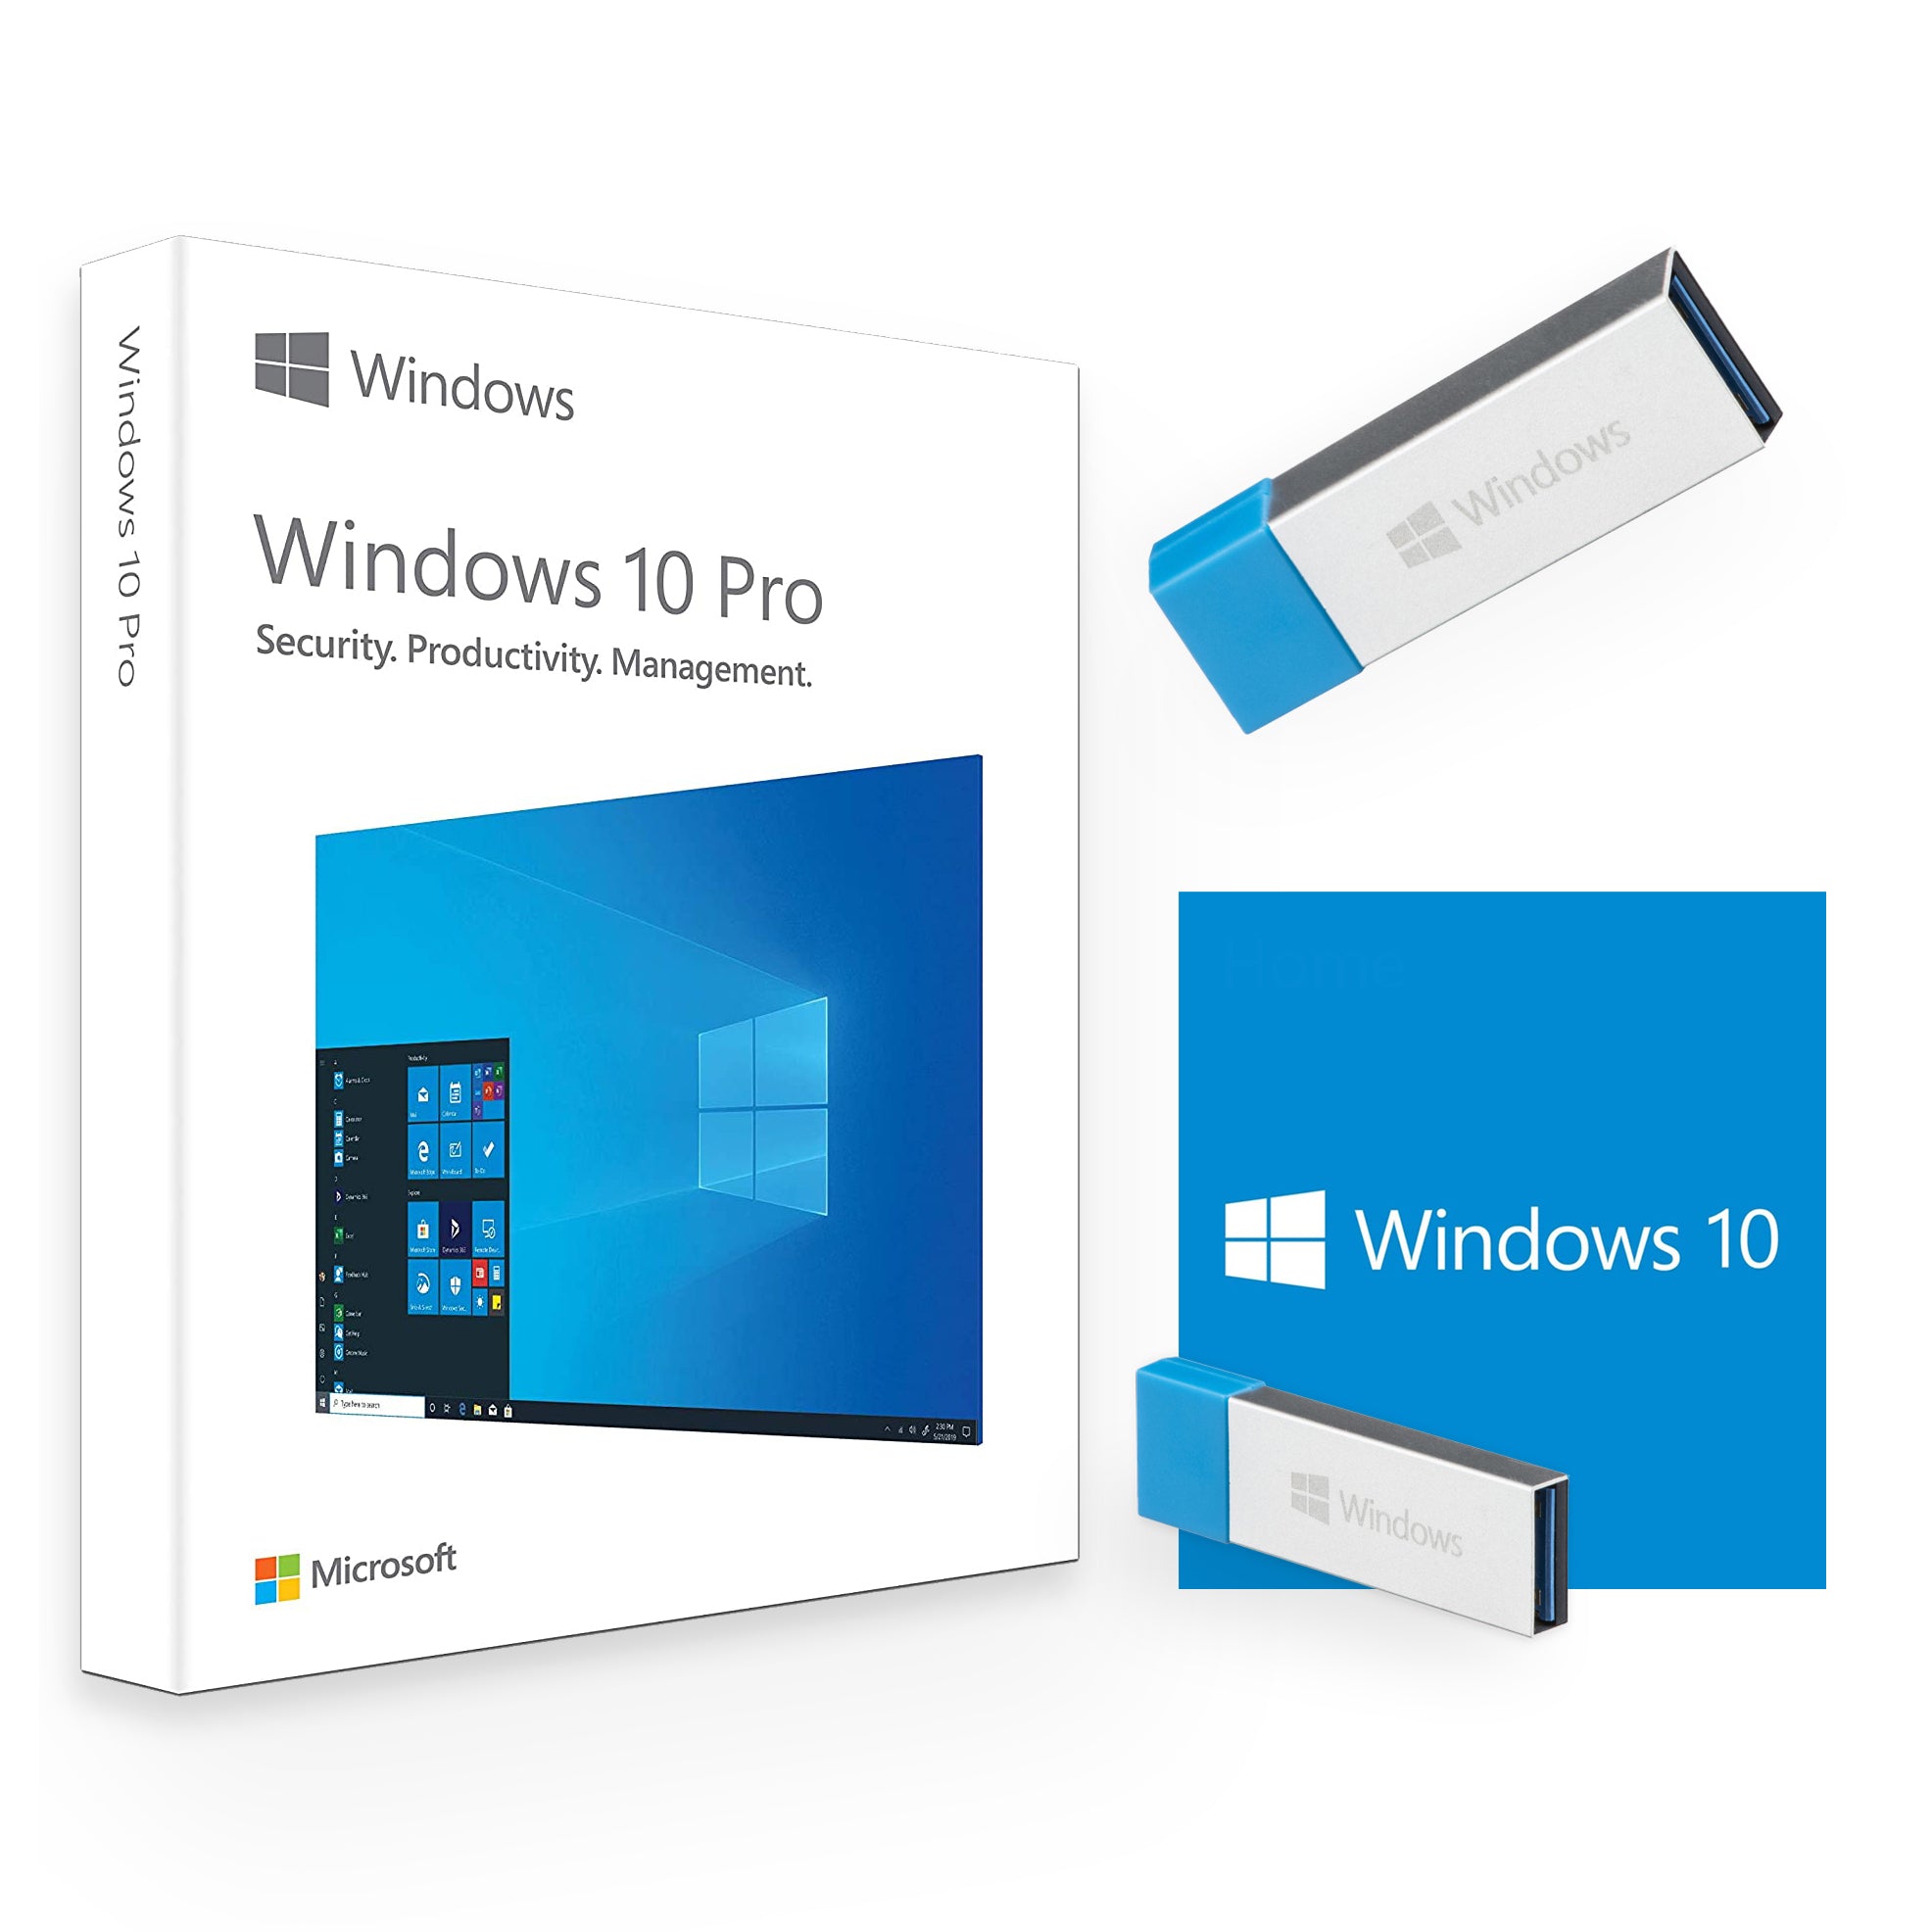 vare Udholdenhed Ingeniører Microsoft Windows 10 Pro - Full Retail Version (Usb Flash – TeciSoft